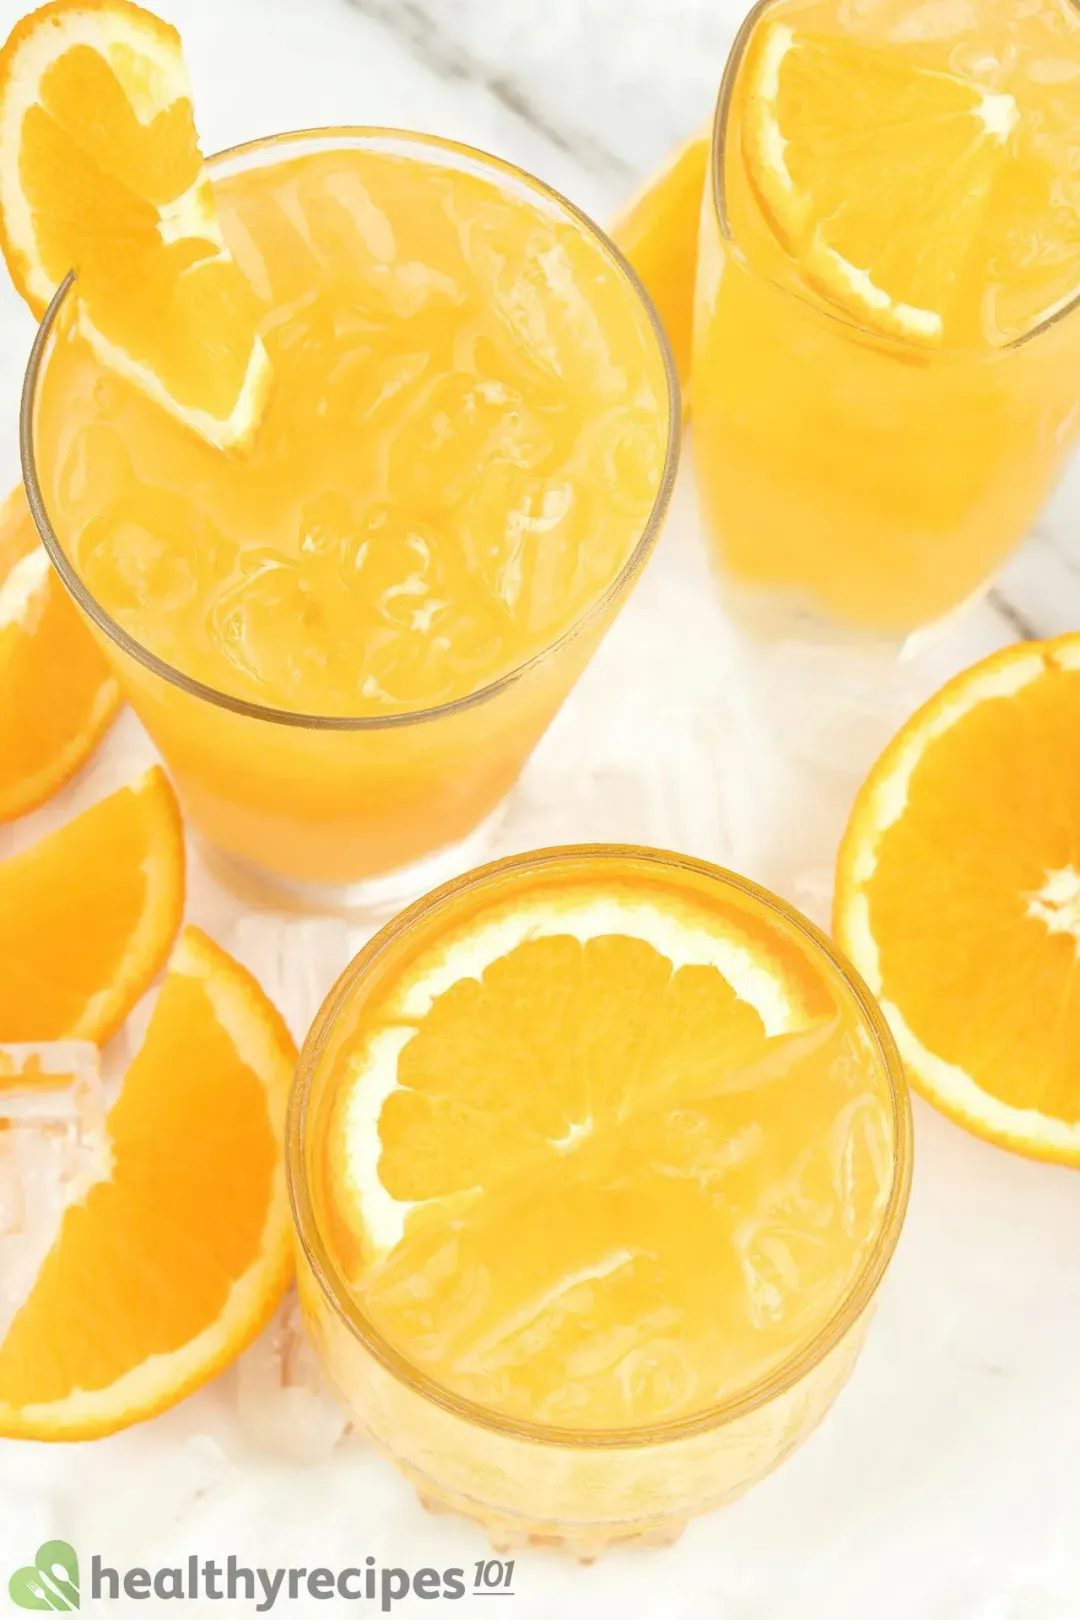 can you freeze simply orange juice